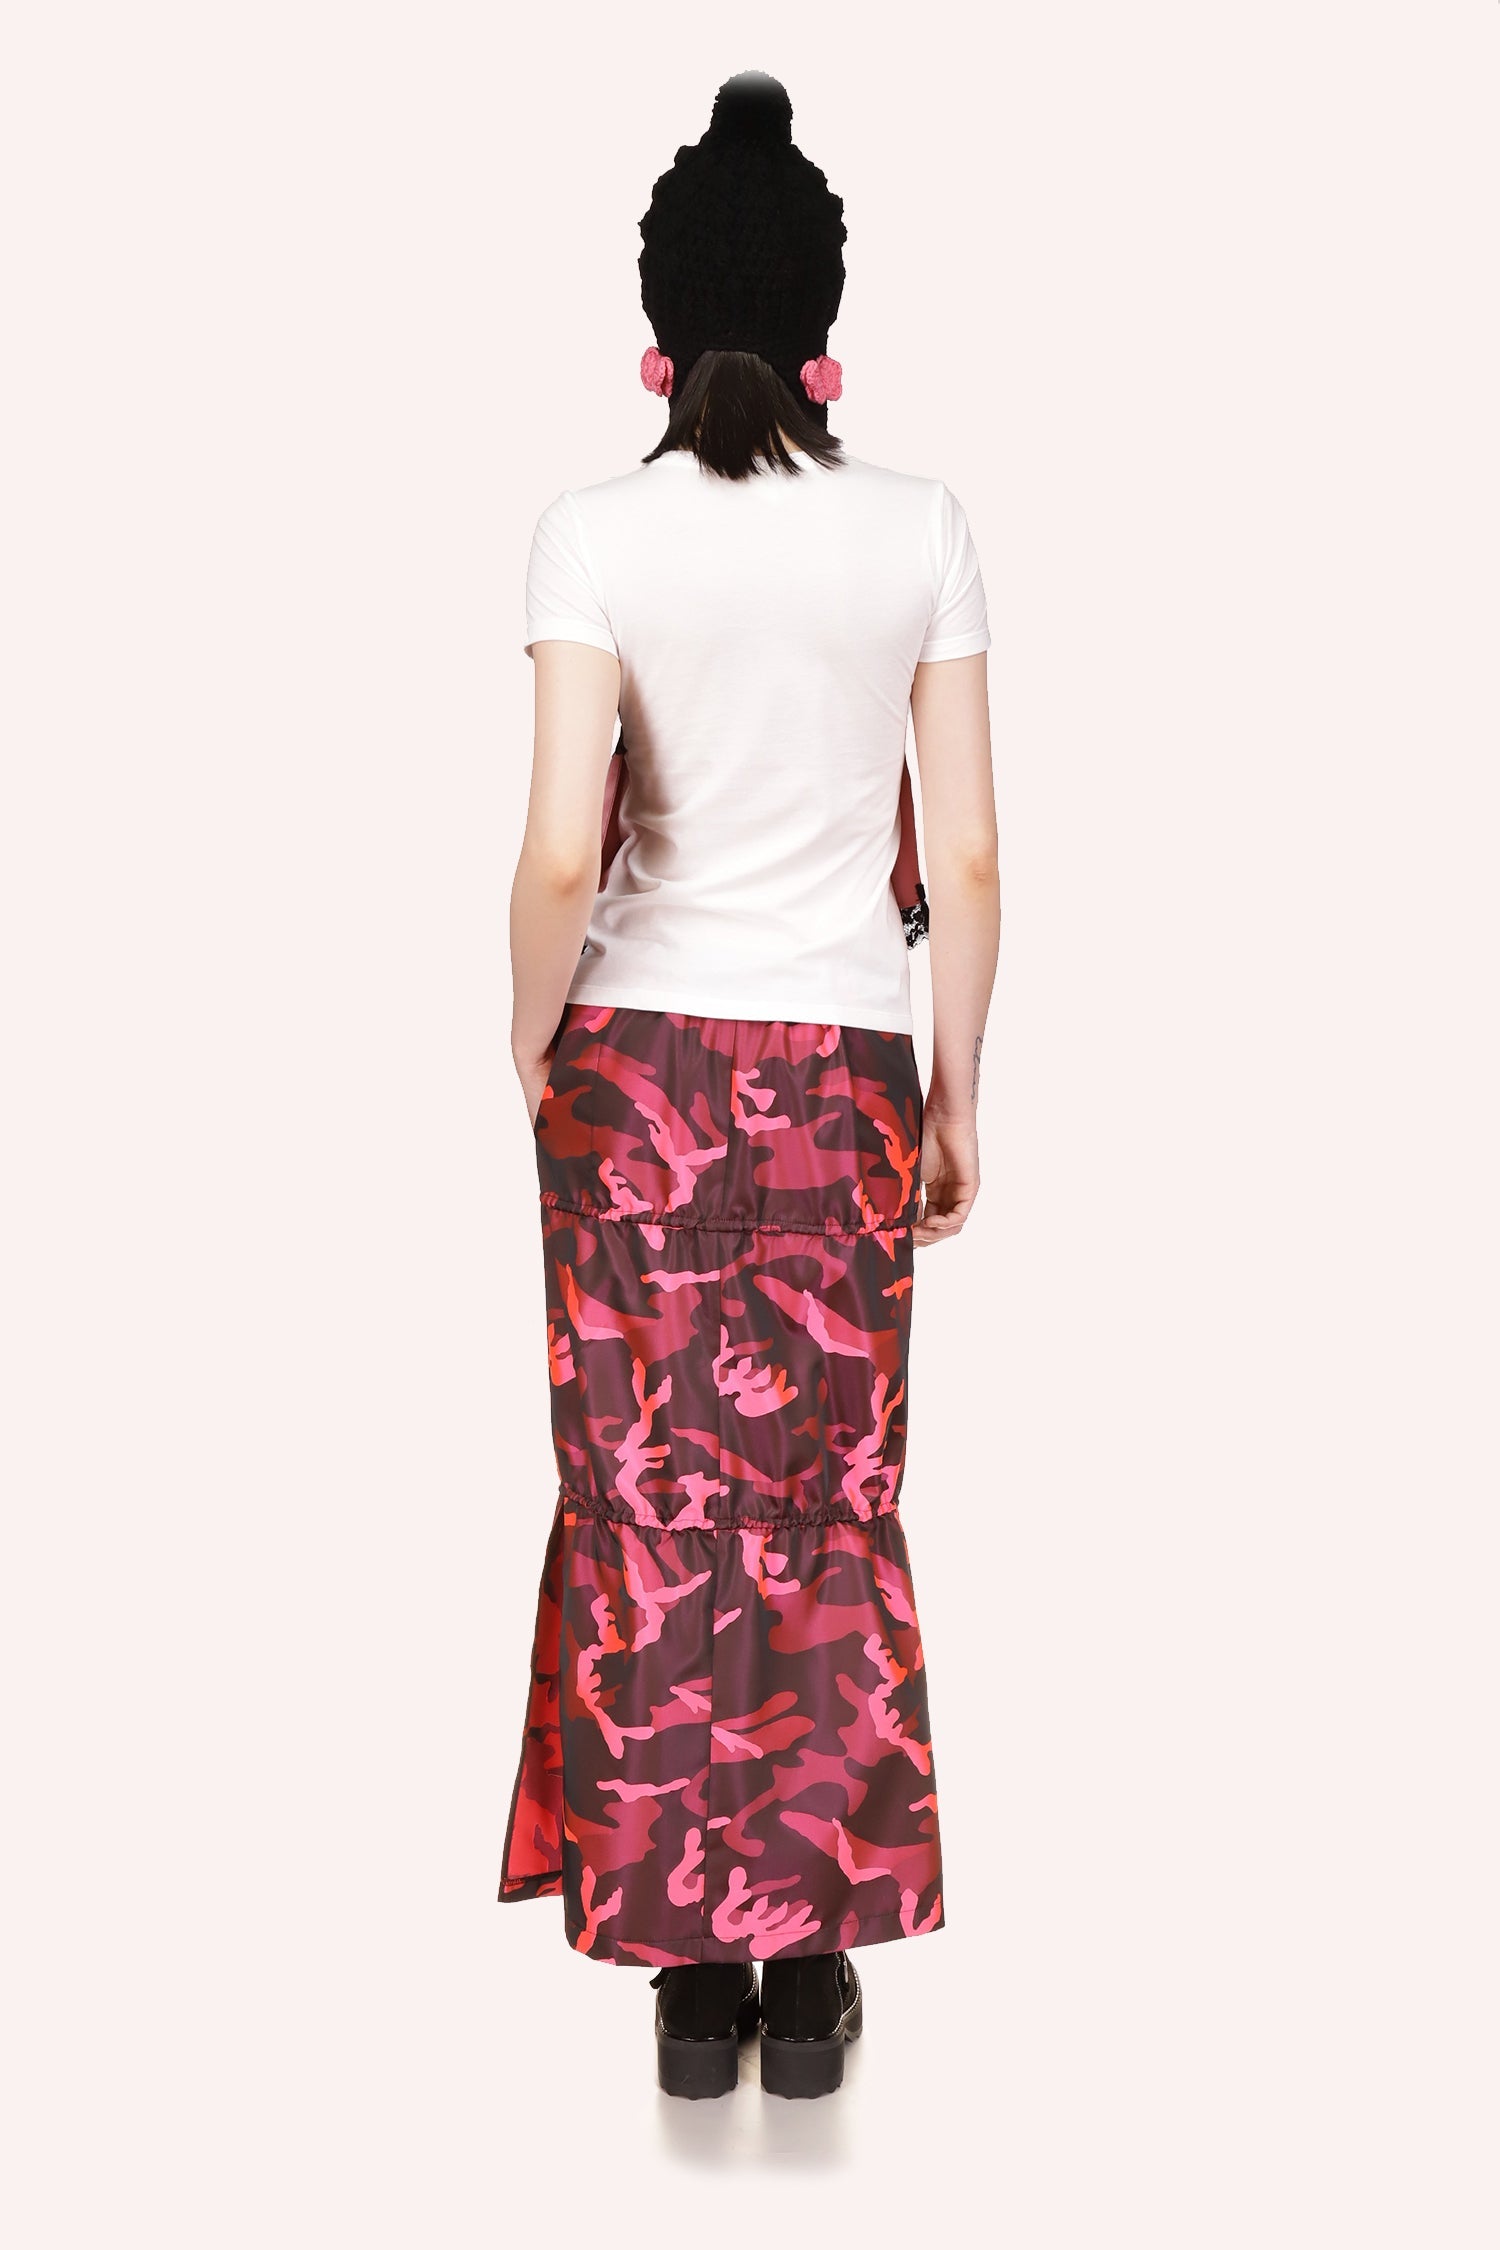 Anna Sui的內衣裝飾T恤玫瑰是無袖和無背的